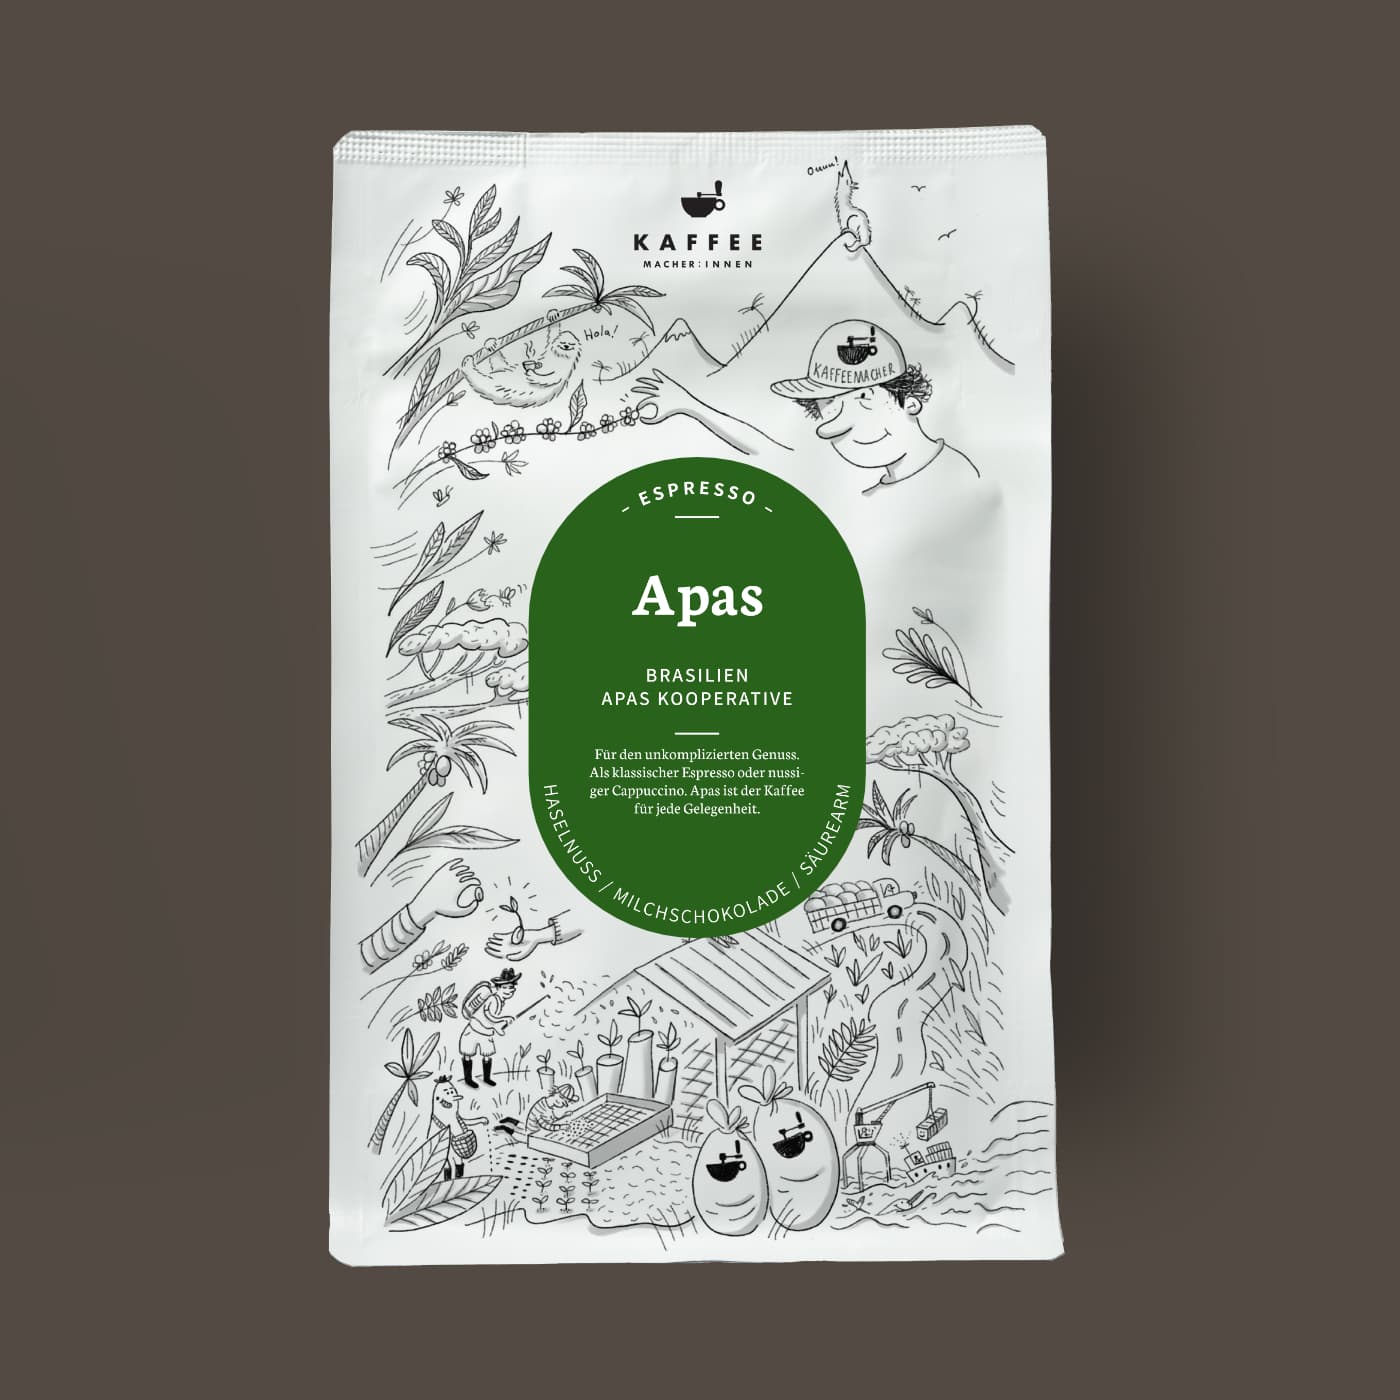 Apas, organic espresso from Brazil